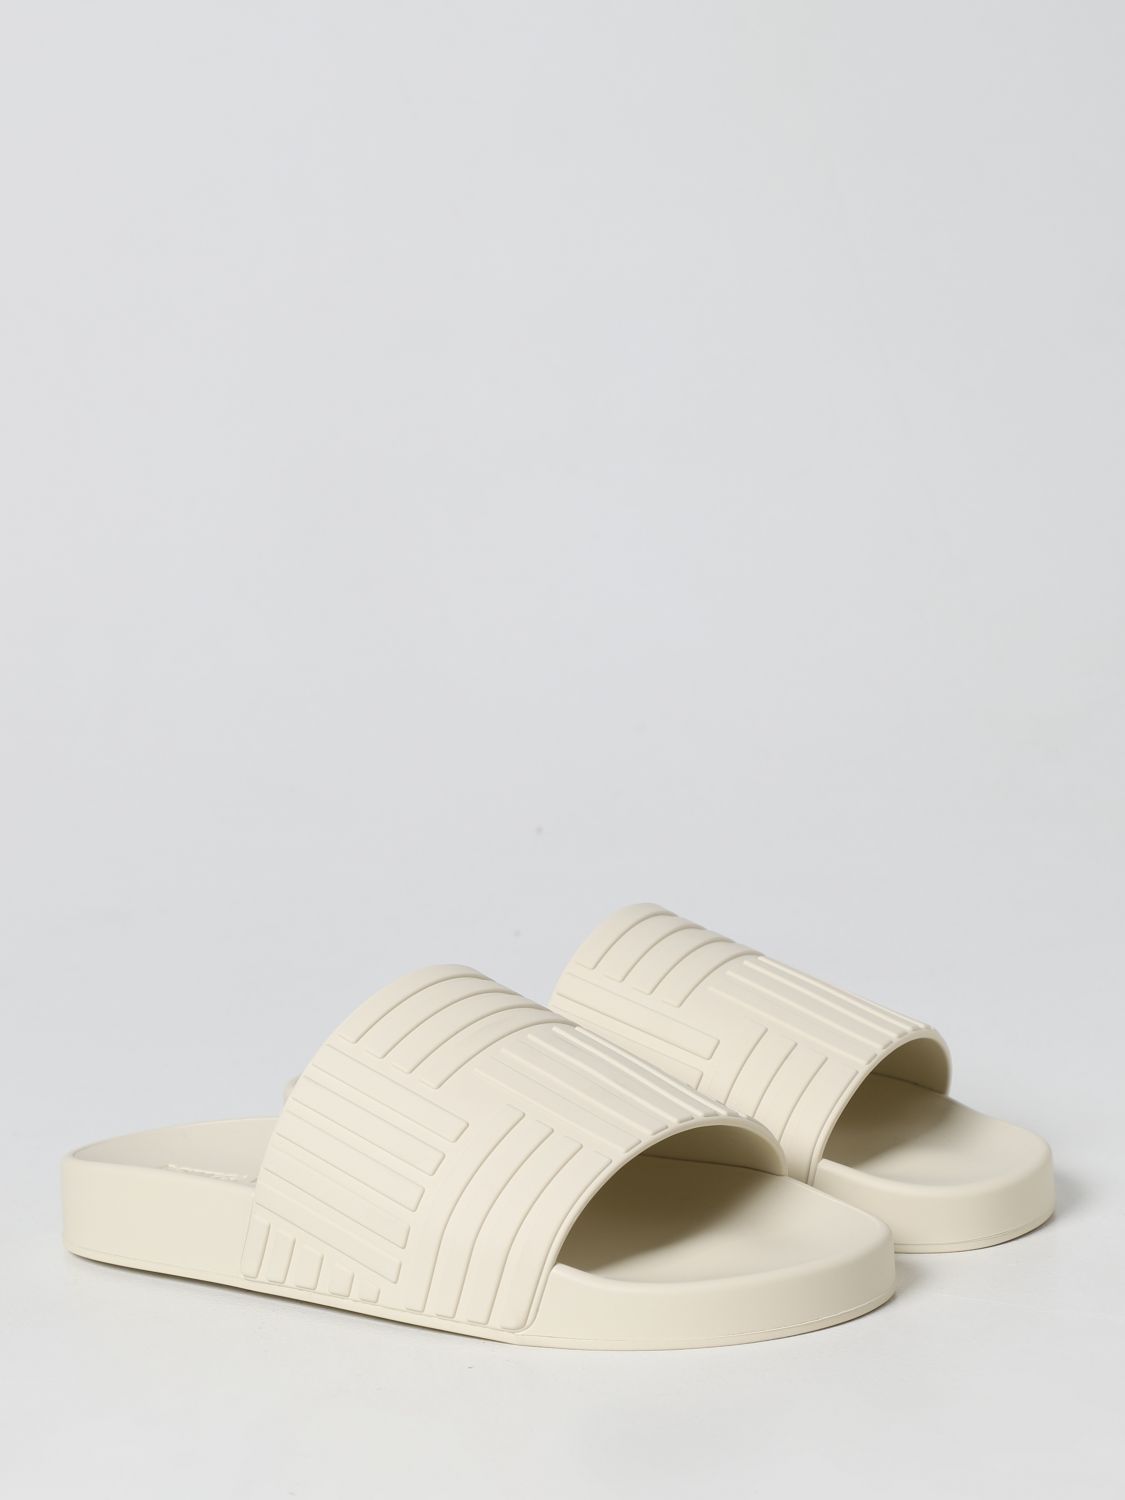 BOTTEGA VENETA: rubber sliders - Ivory | Bottega Veneta sandals ...